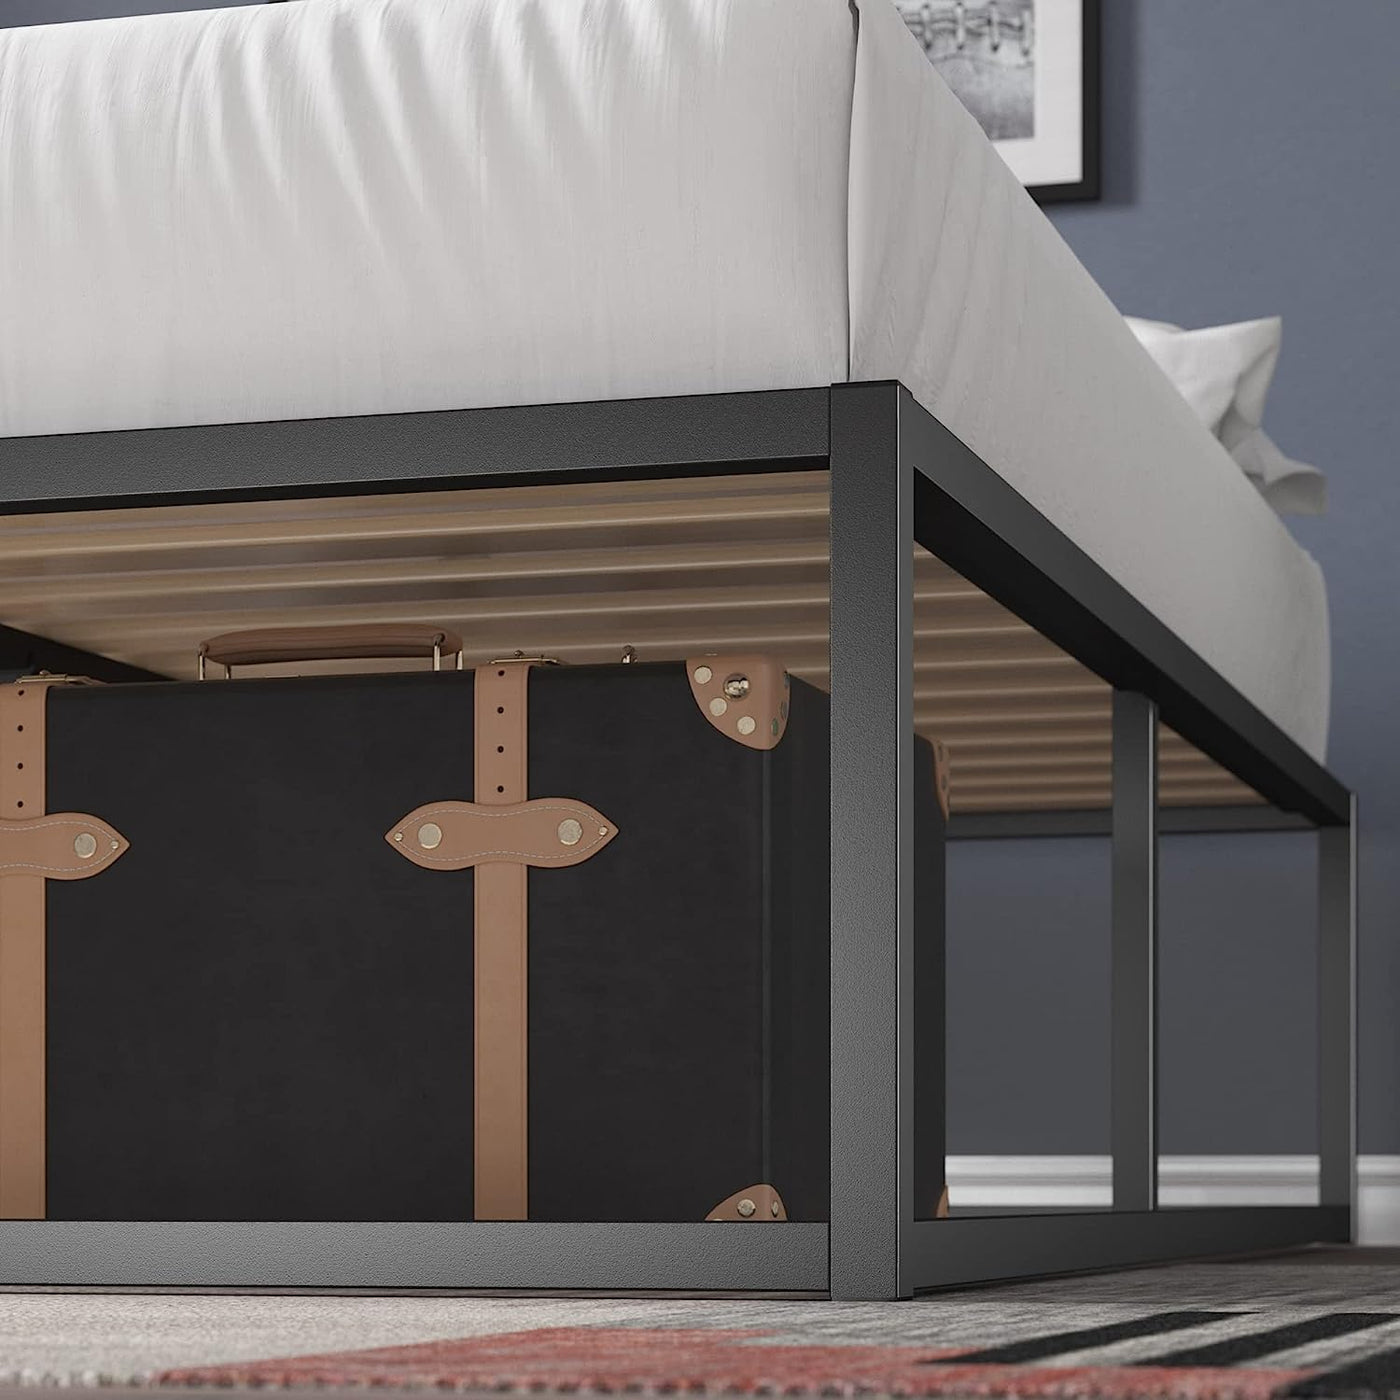 ZINUS Joseph Metal Platforma Bed Frame, Twin - $80